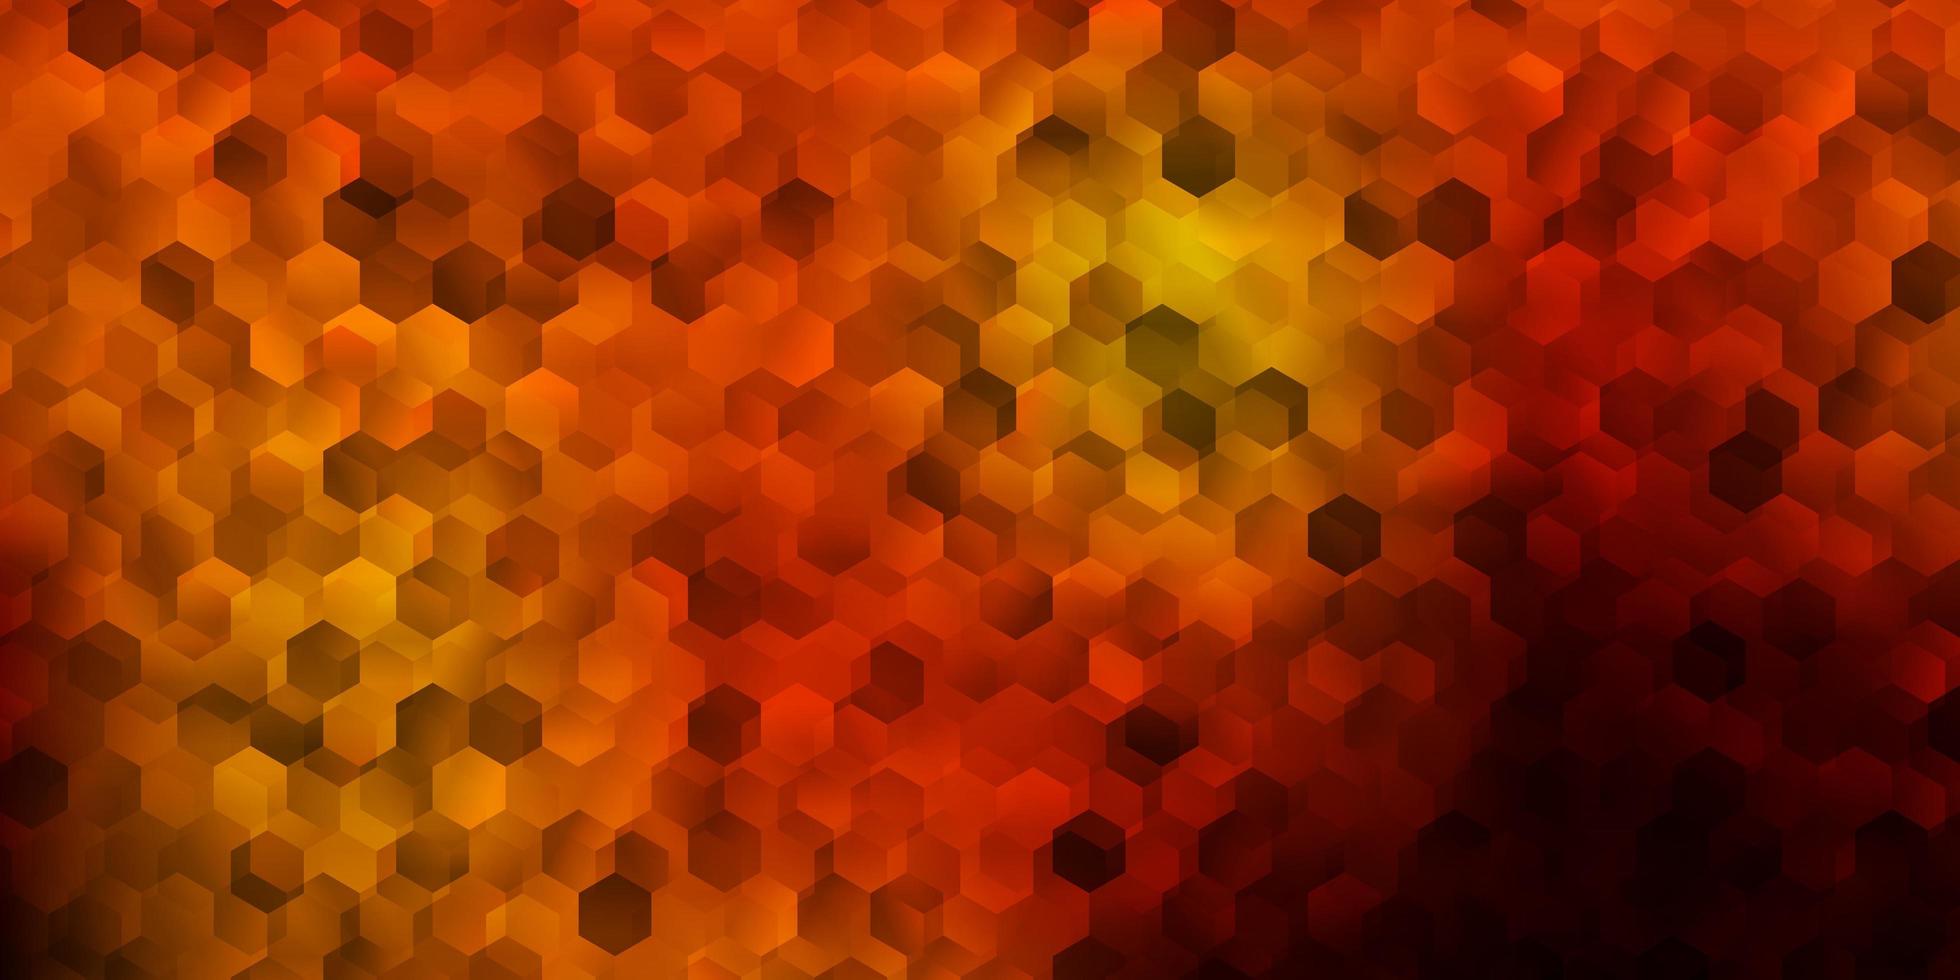 mörk orange bakgrund med sexkantiga former. vektor